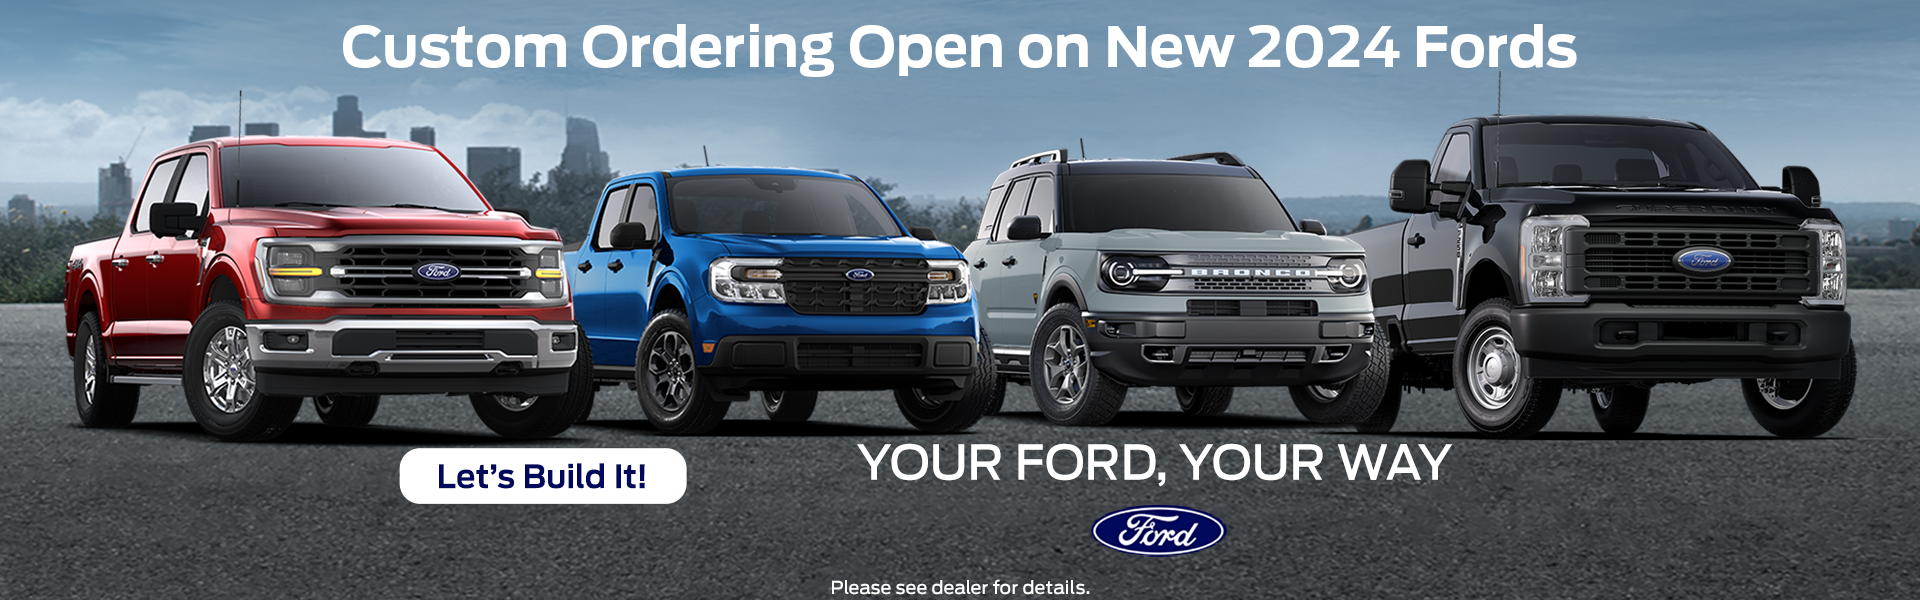 Ford Custom Ordering